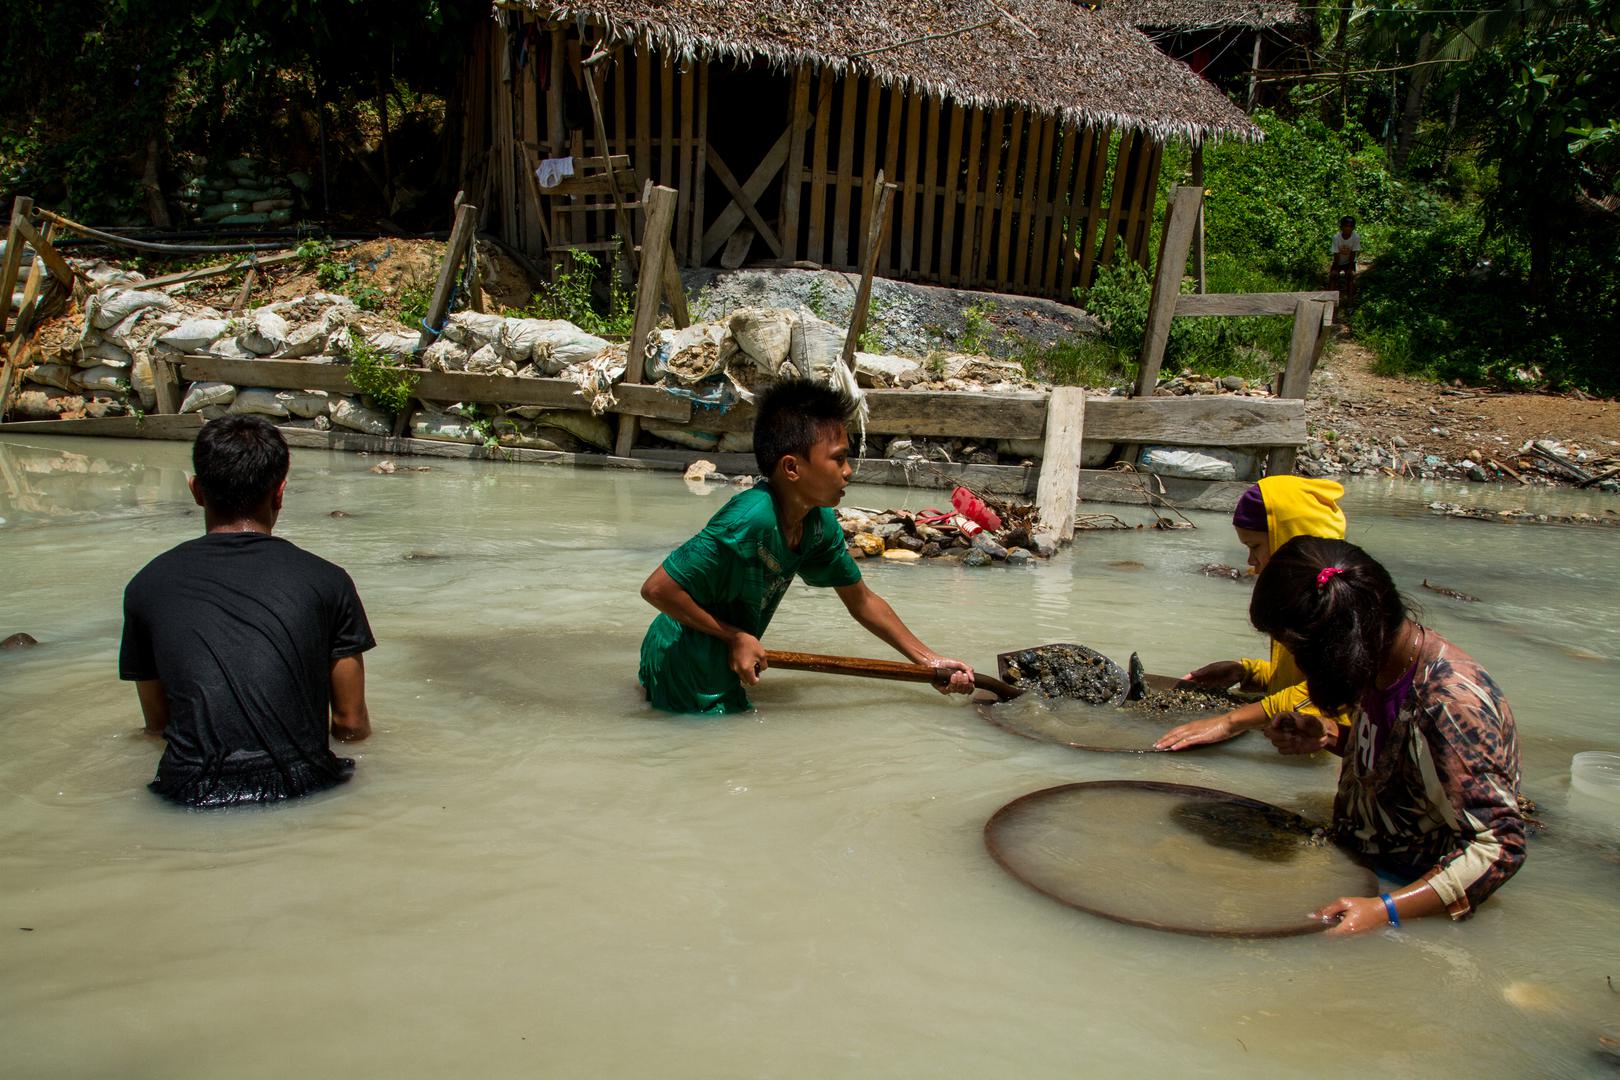 Children pan for gold along the mercury-contaminated Bosigon River in Malaya, Camarines Norte.